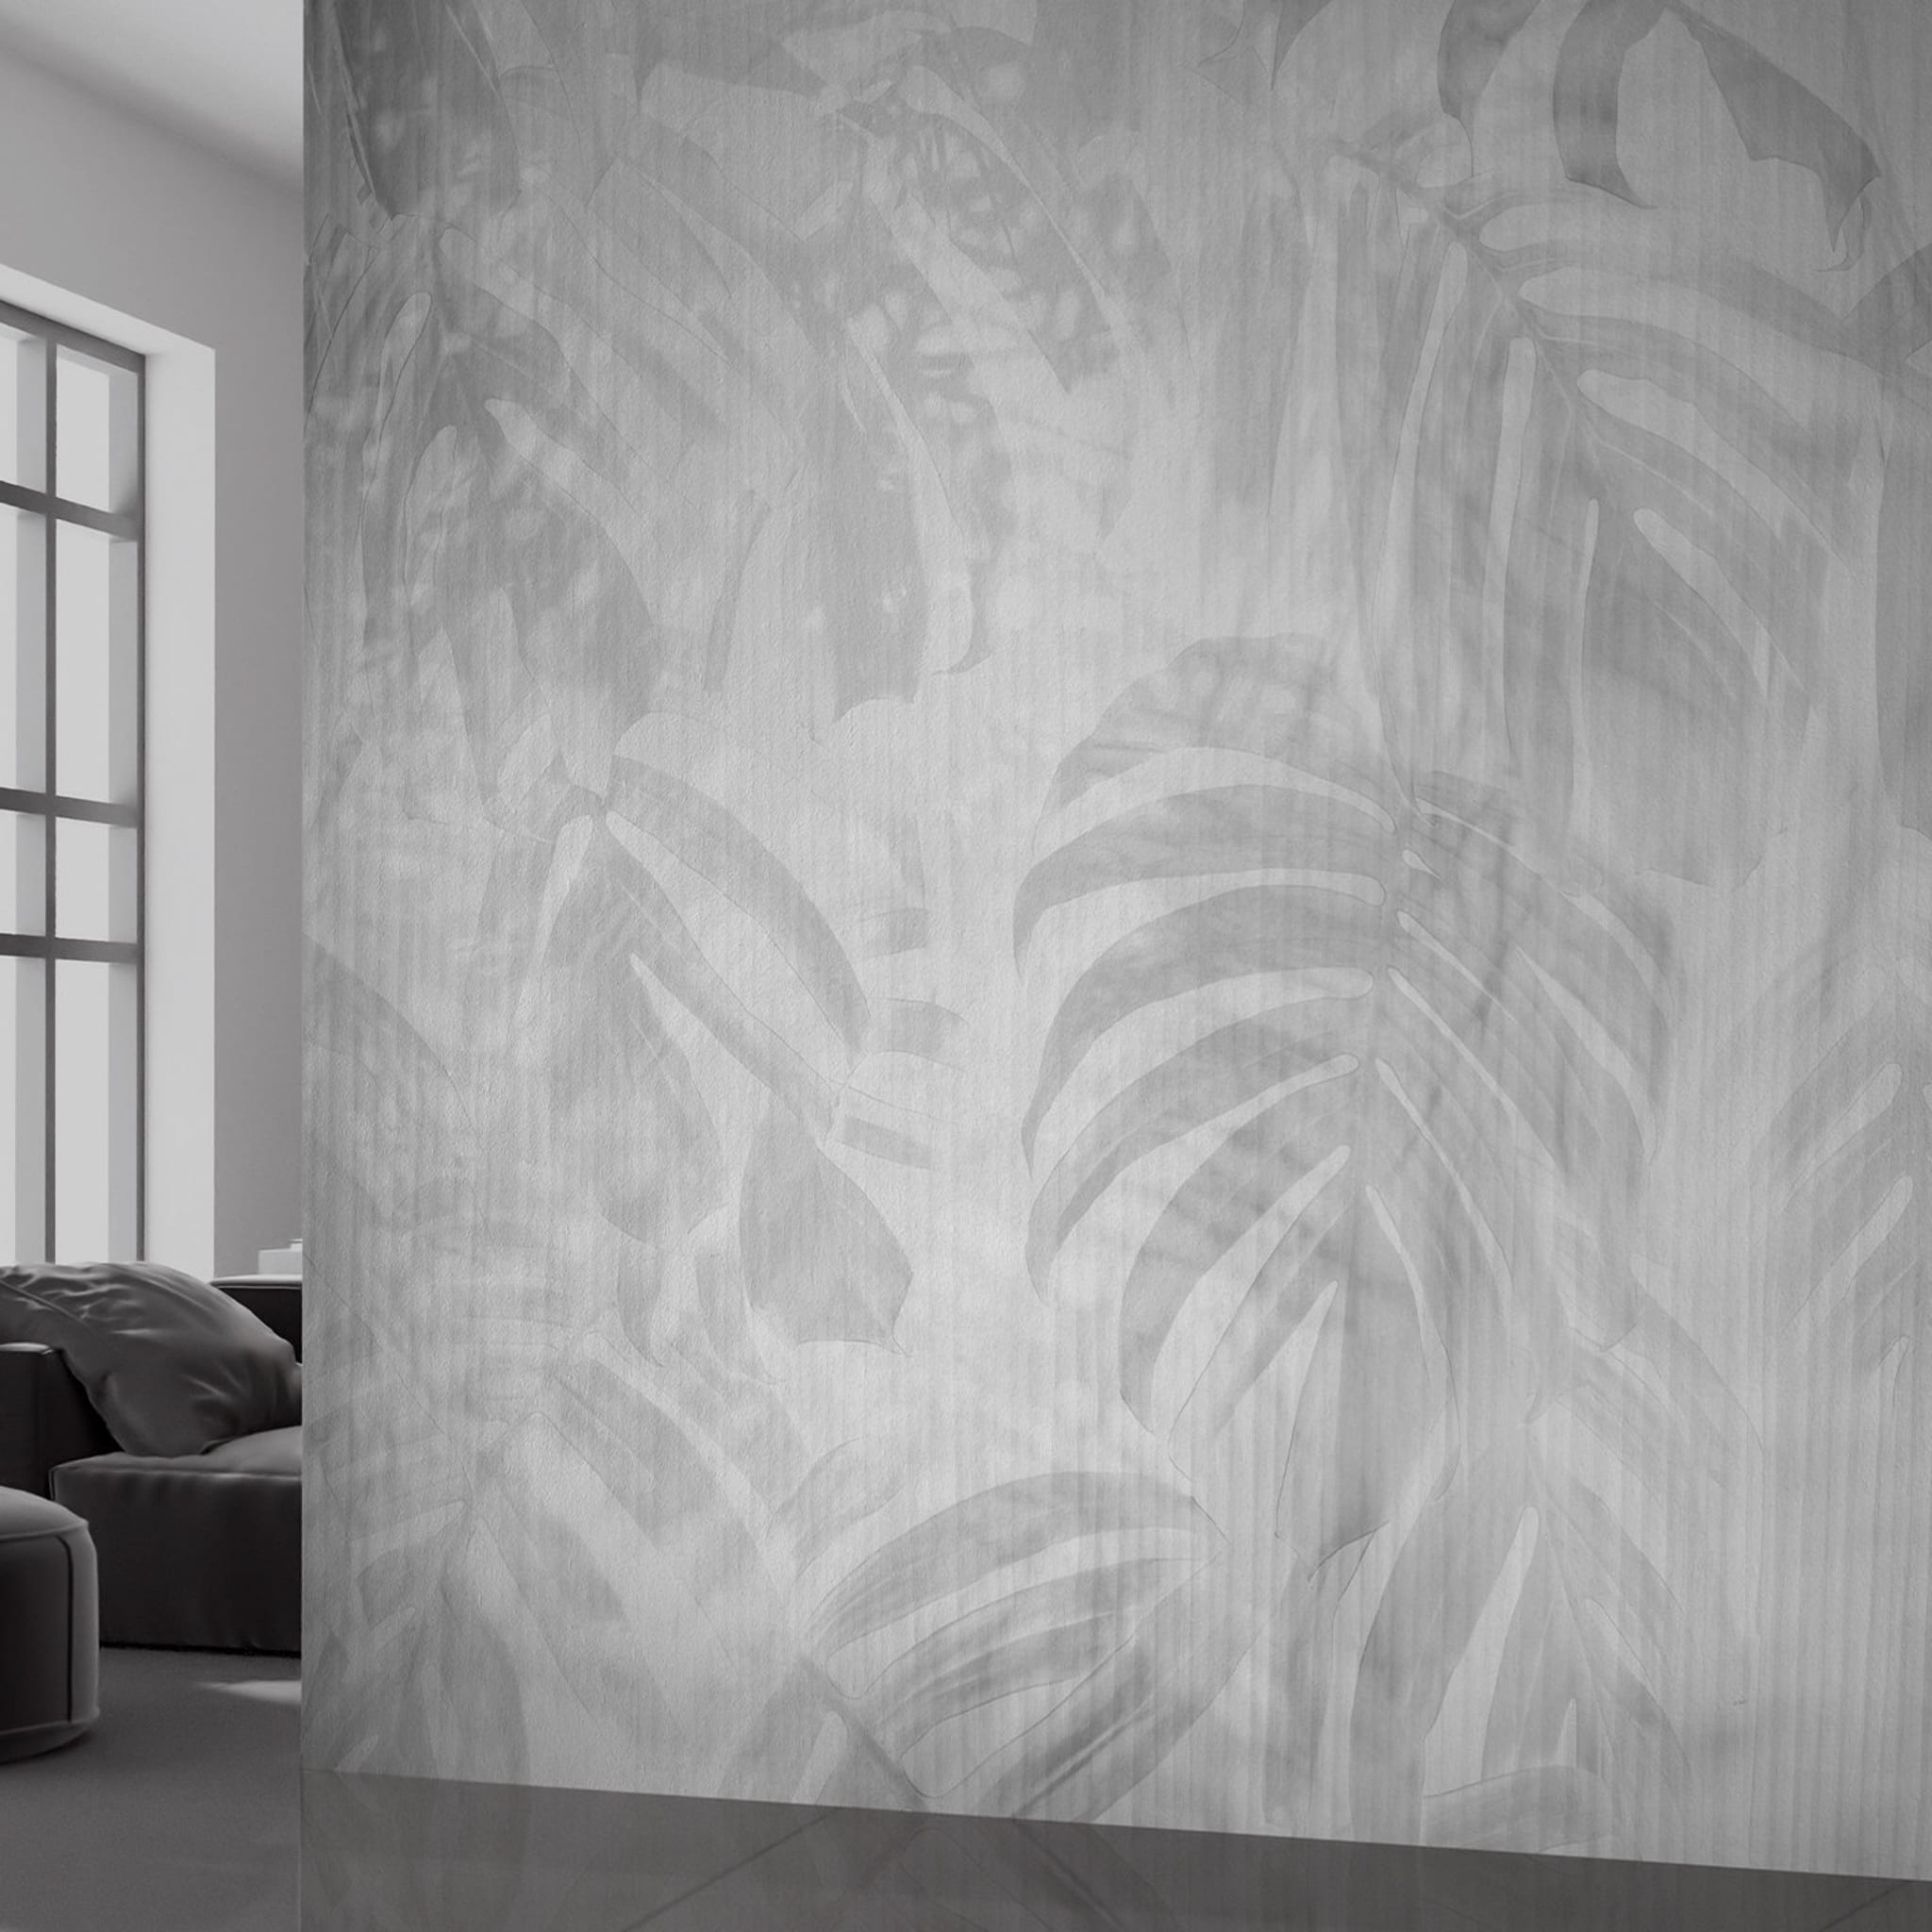 Monochrome Palm Leaves Textured Wallpaper - Alternative view 1